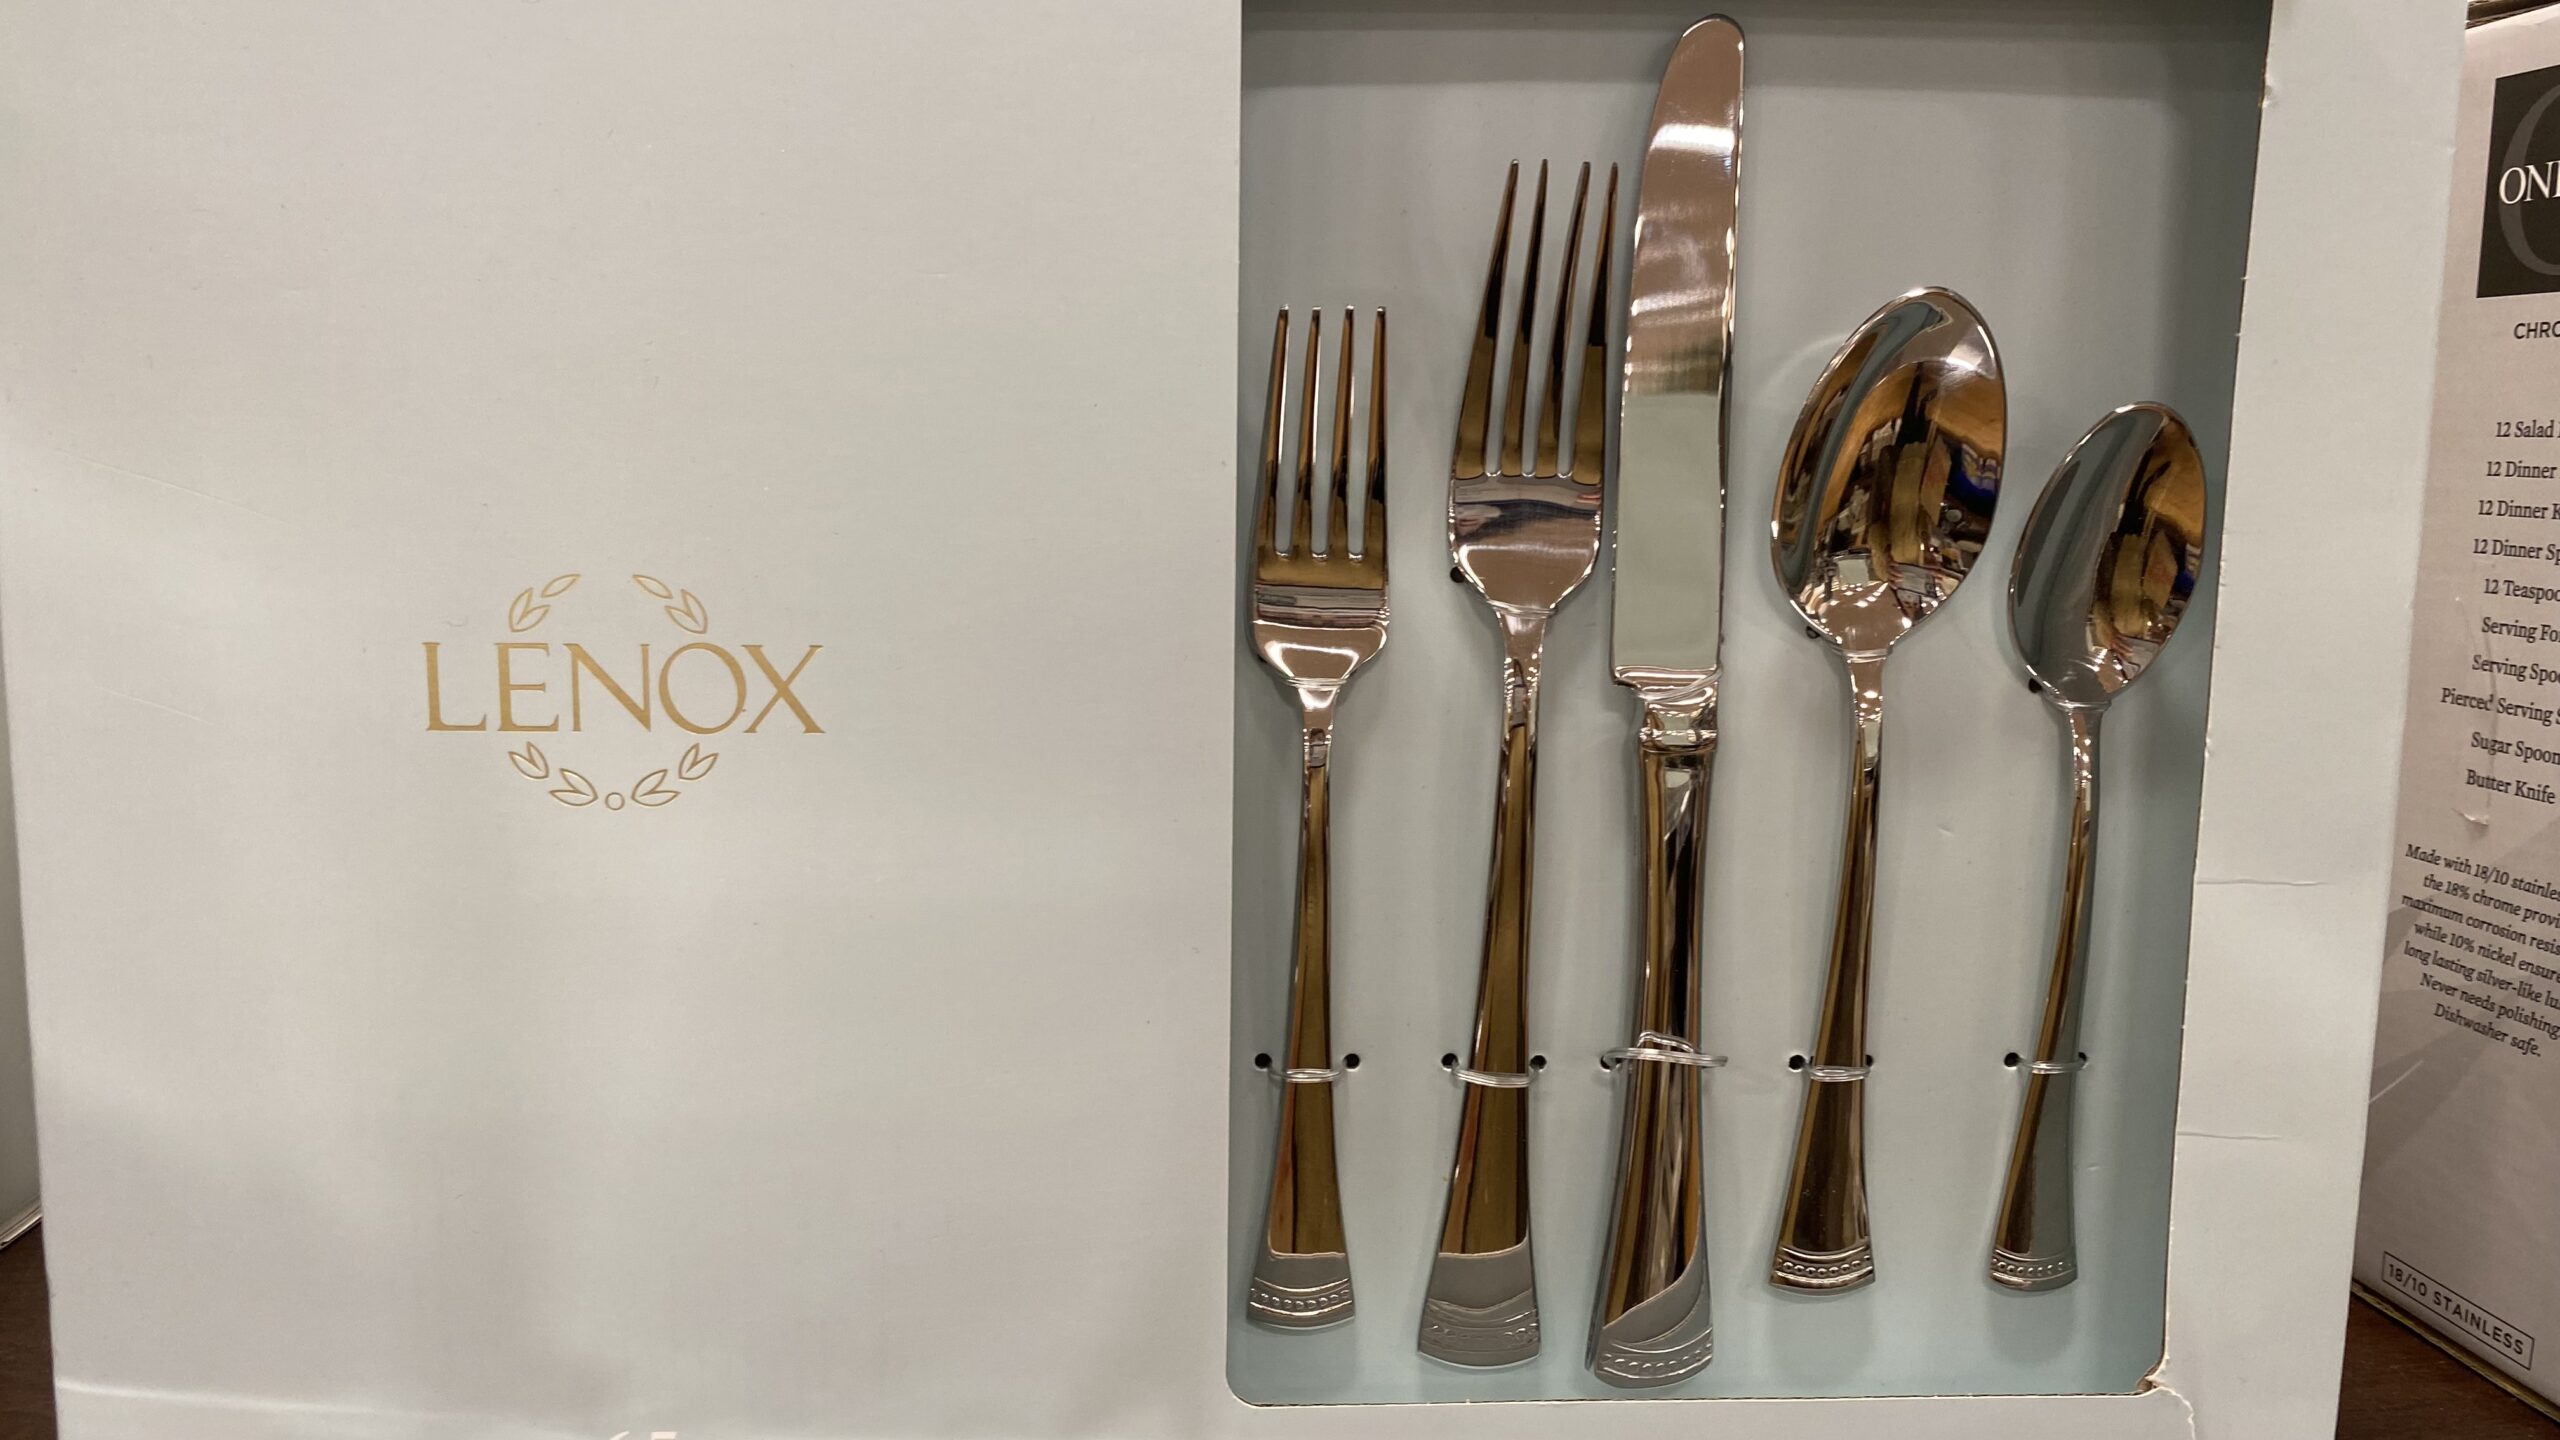 Lenox cutlery